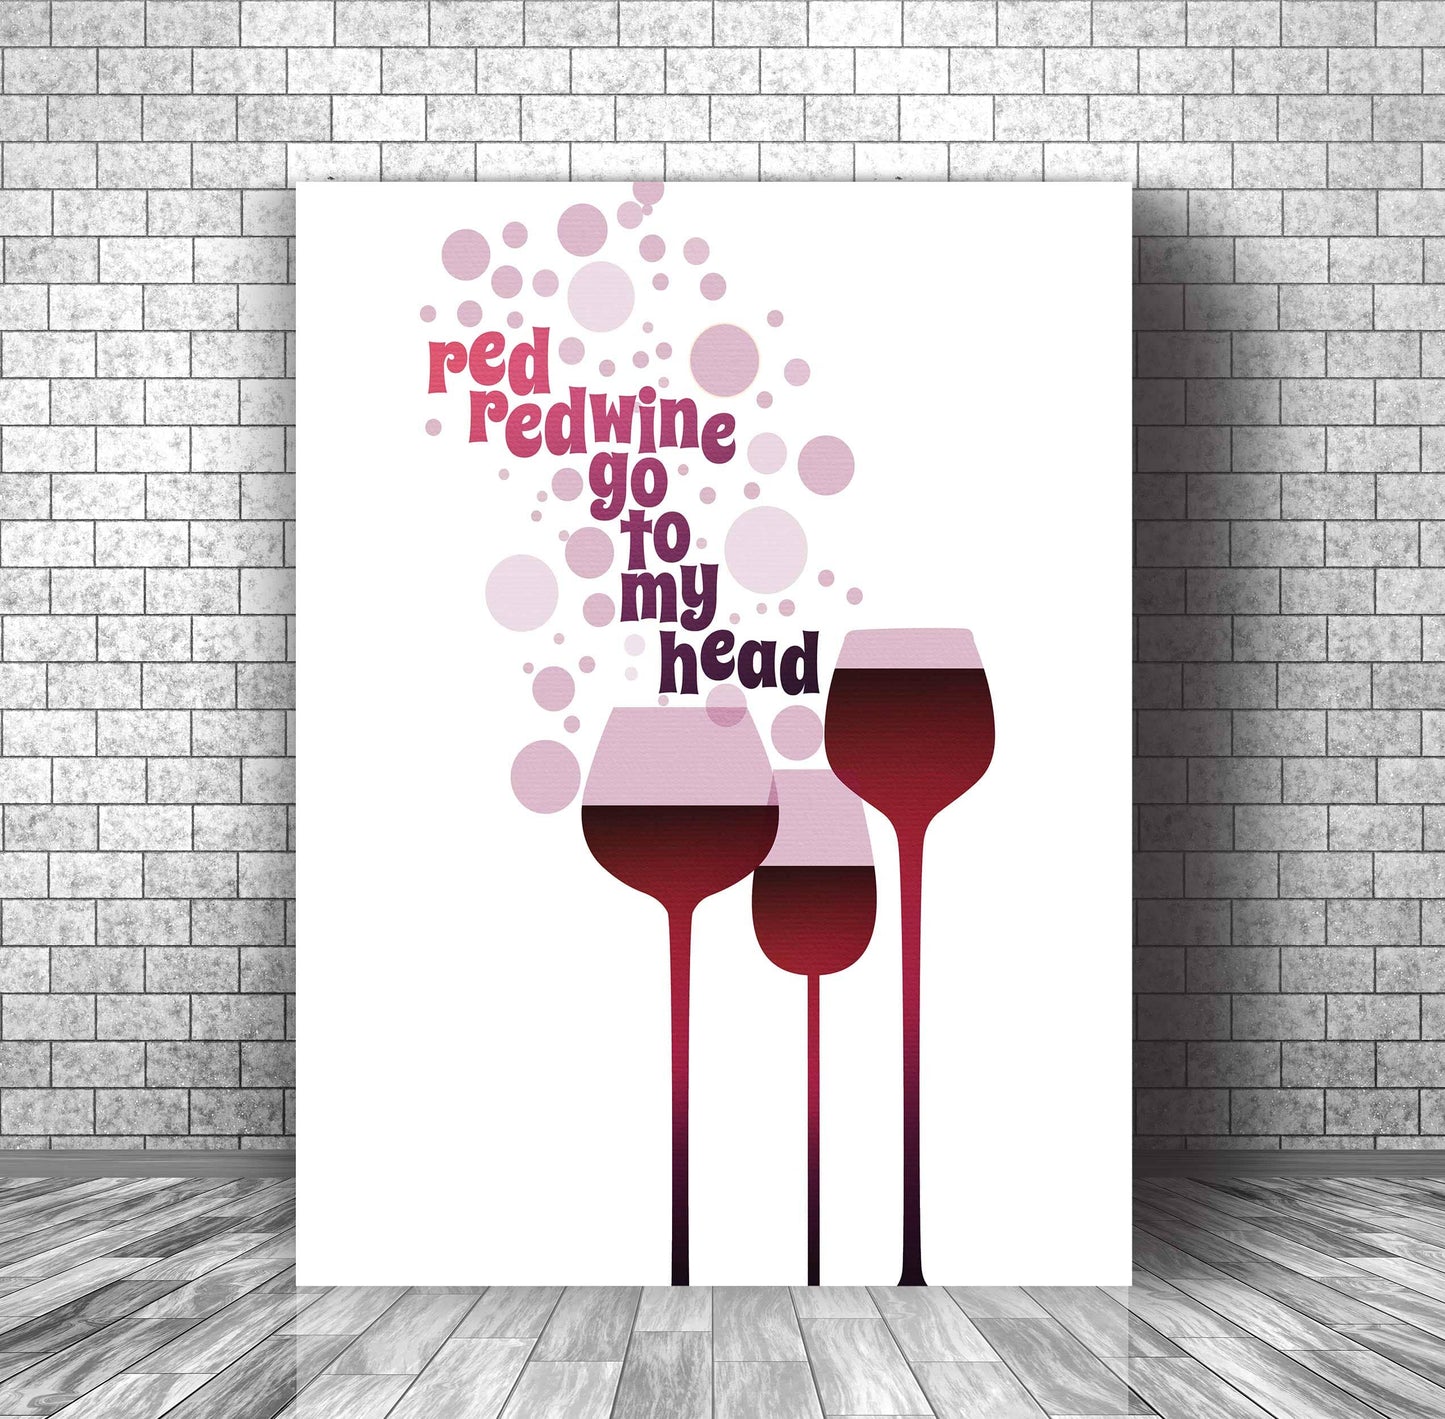 Red Red Wine by Neil Diamond - Music Quote Poster Art Song Lyrics Art Song Lyrics Art 11x14 Canvas Wrap 